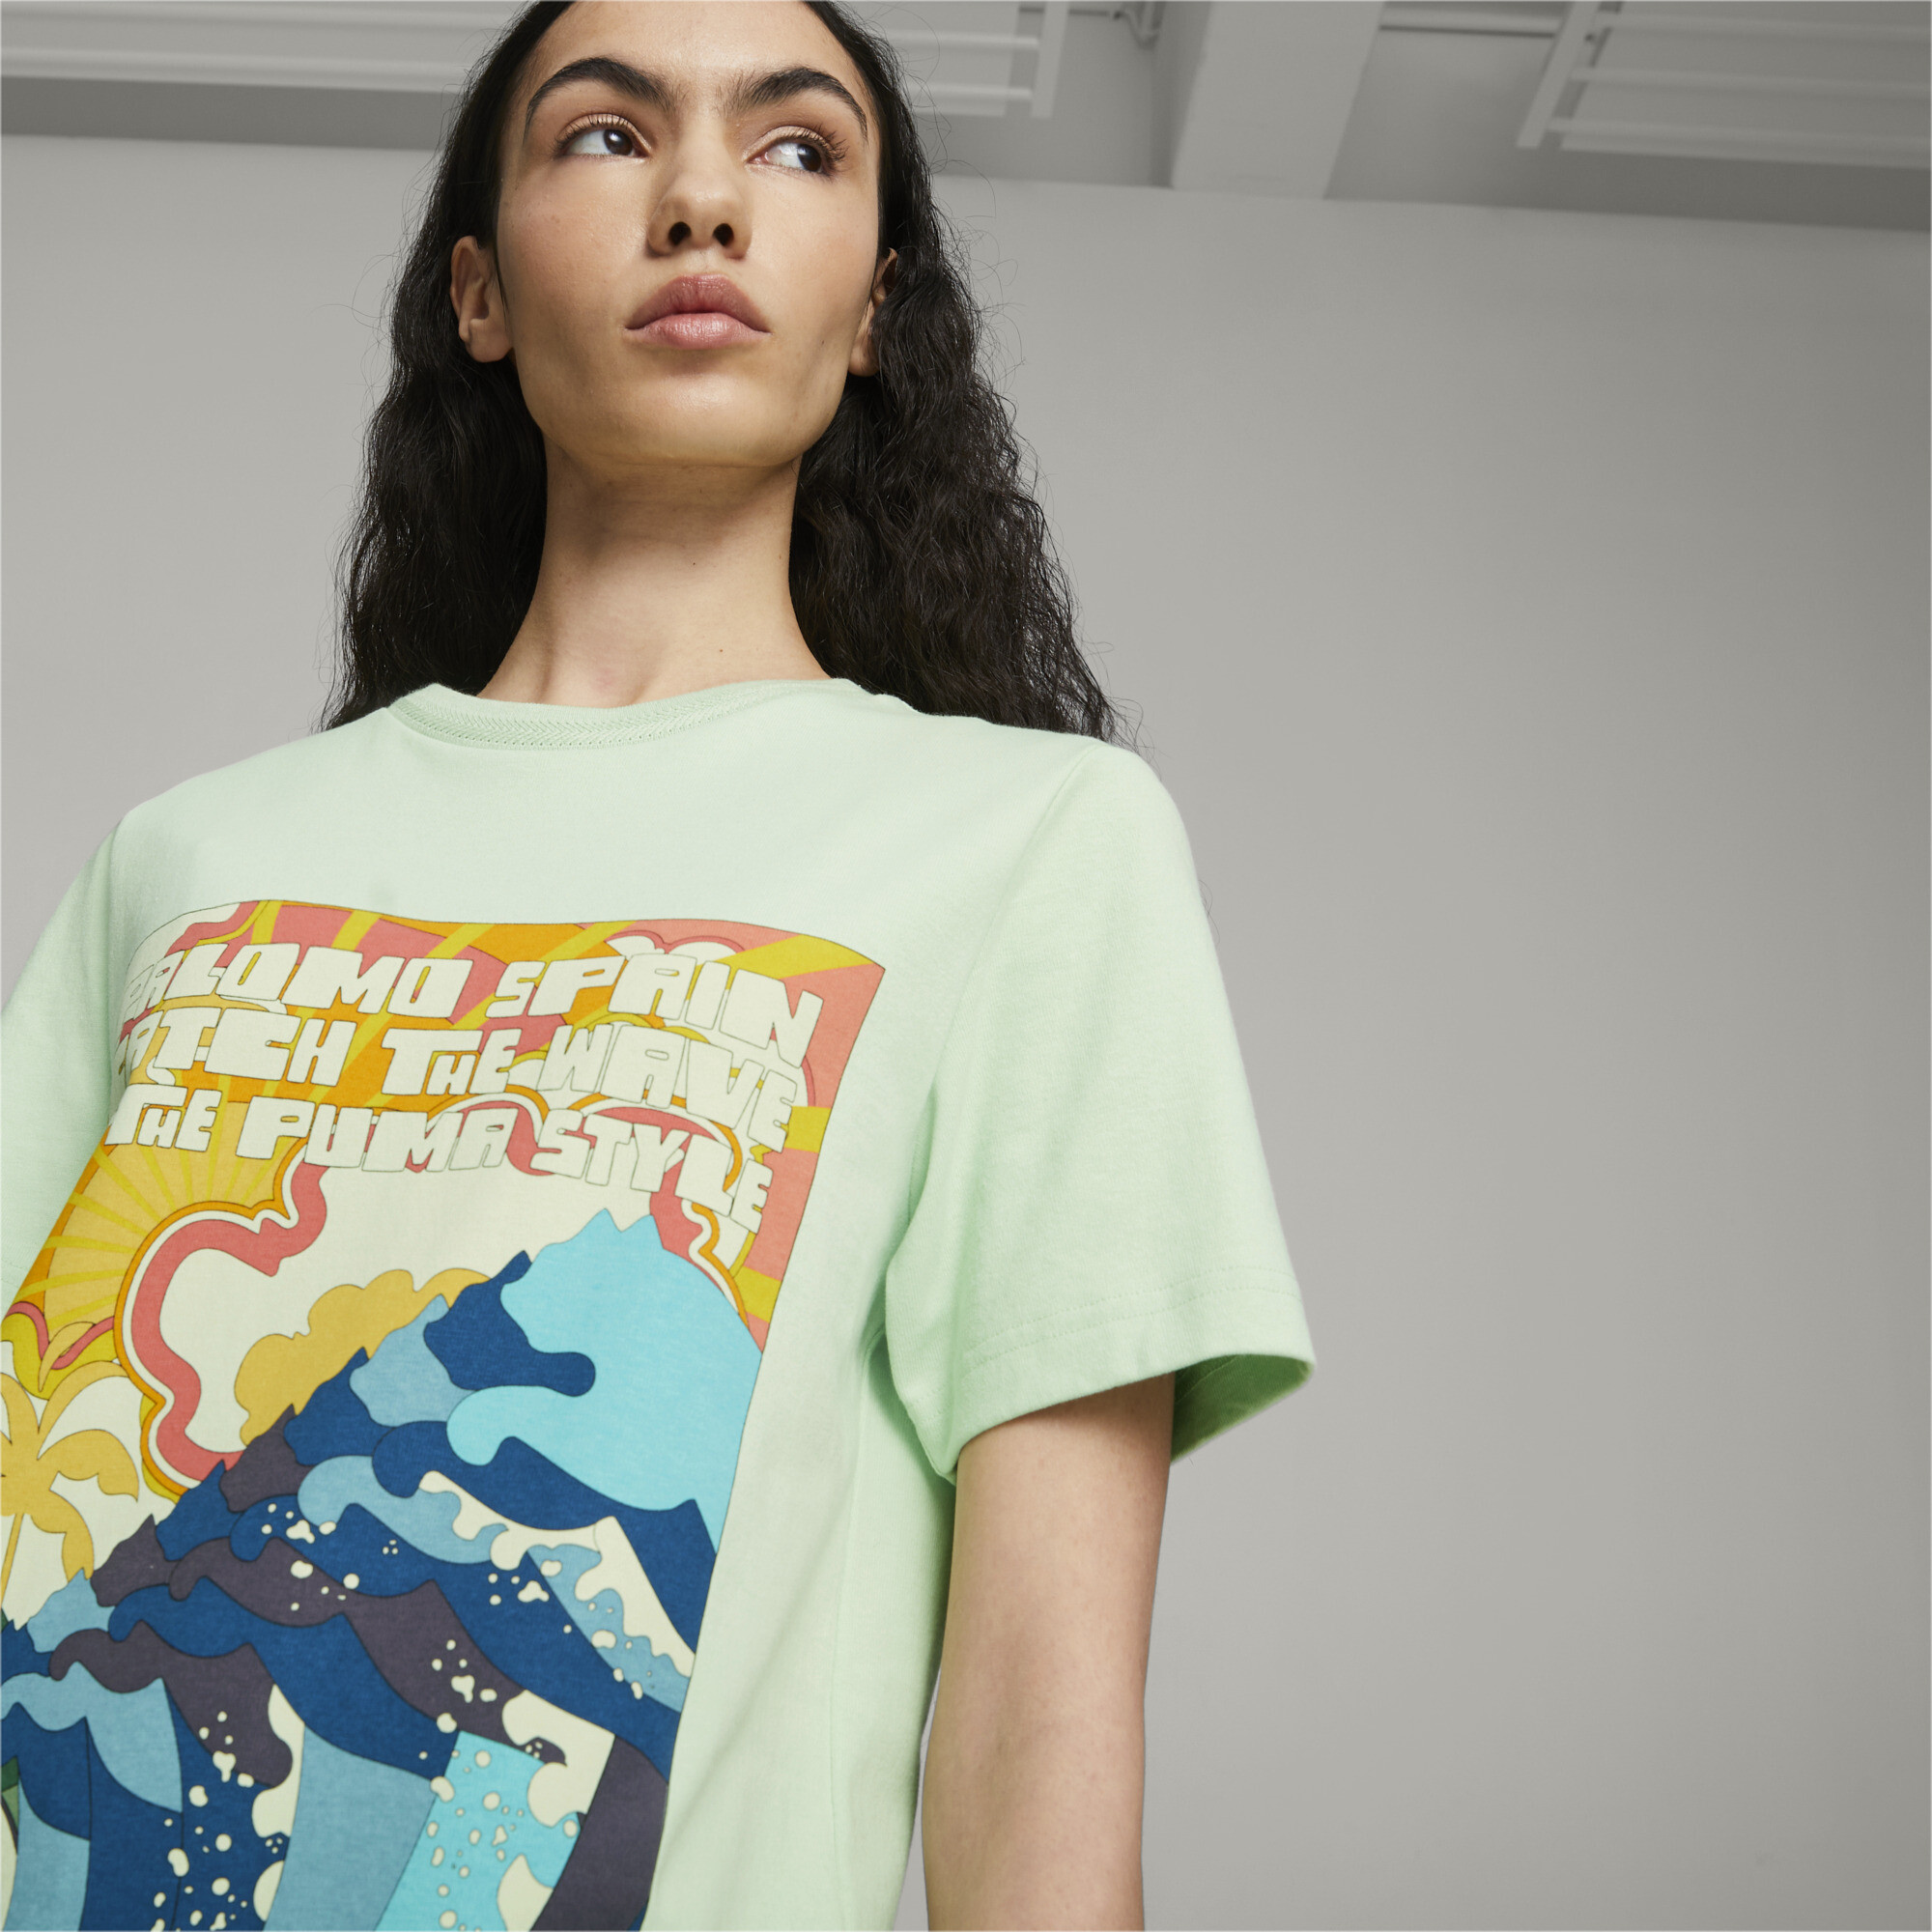 Men's PUMA X PALOMO Graphic T-Shirt In 40 - Green, Size 2XL